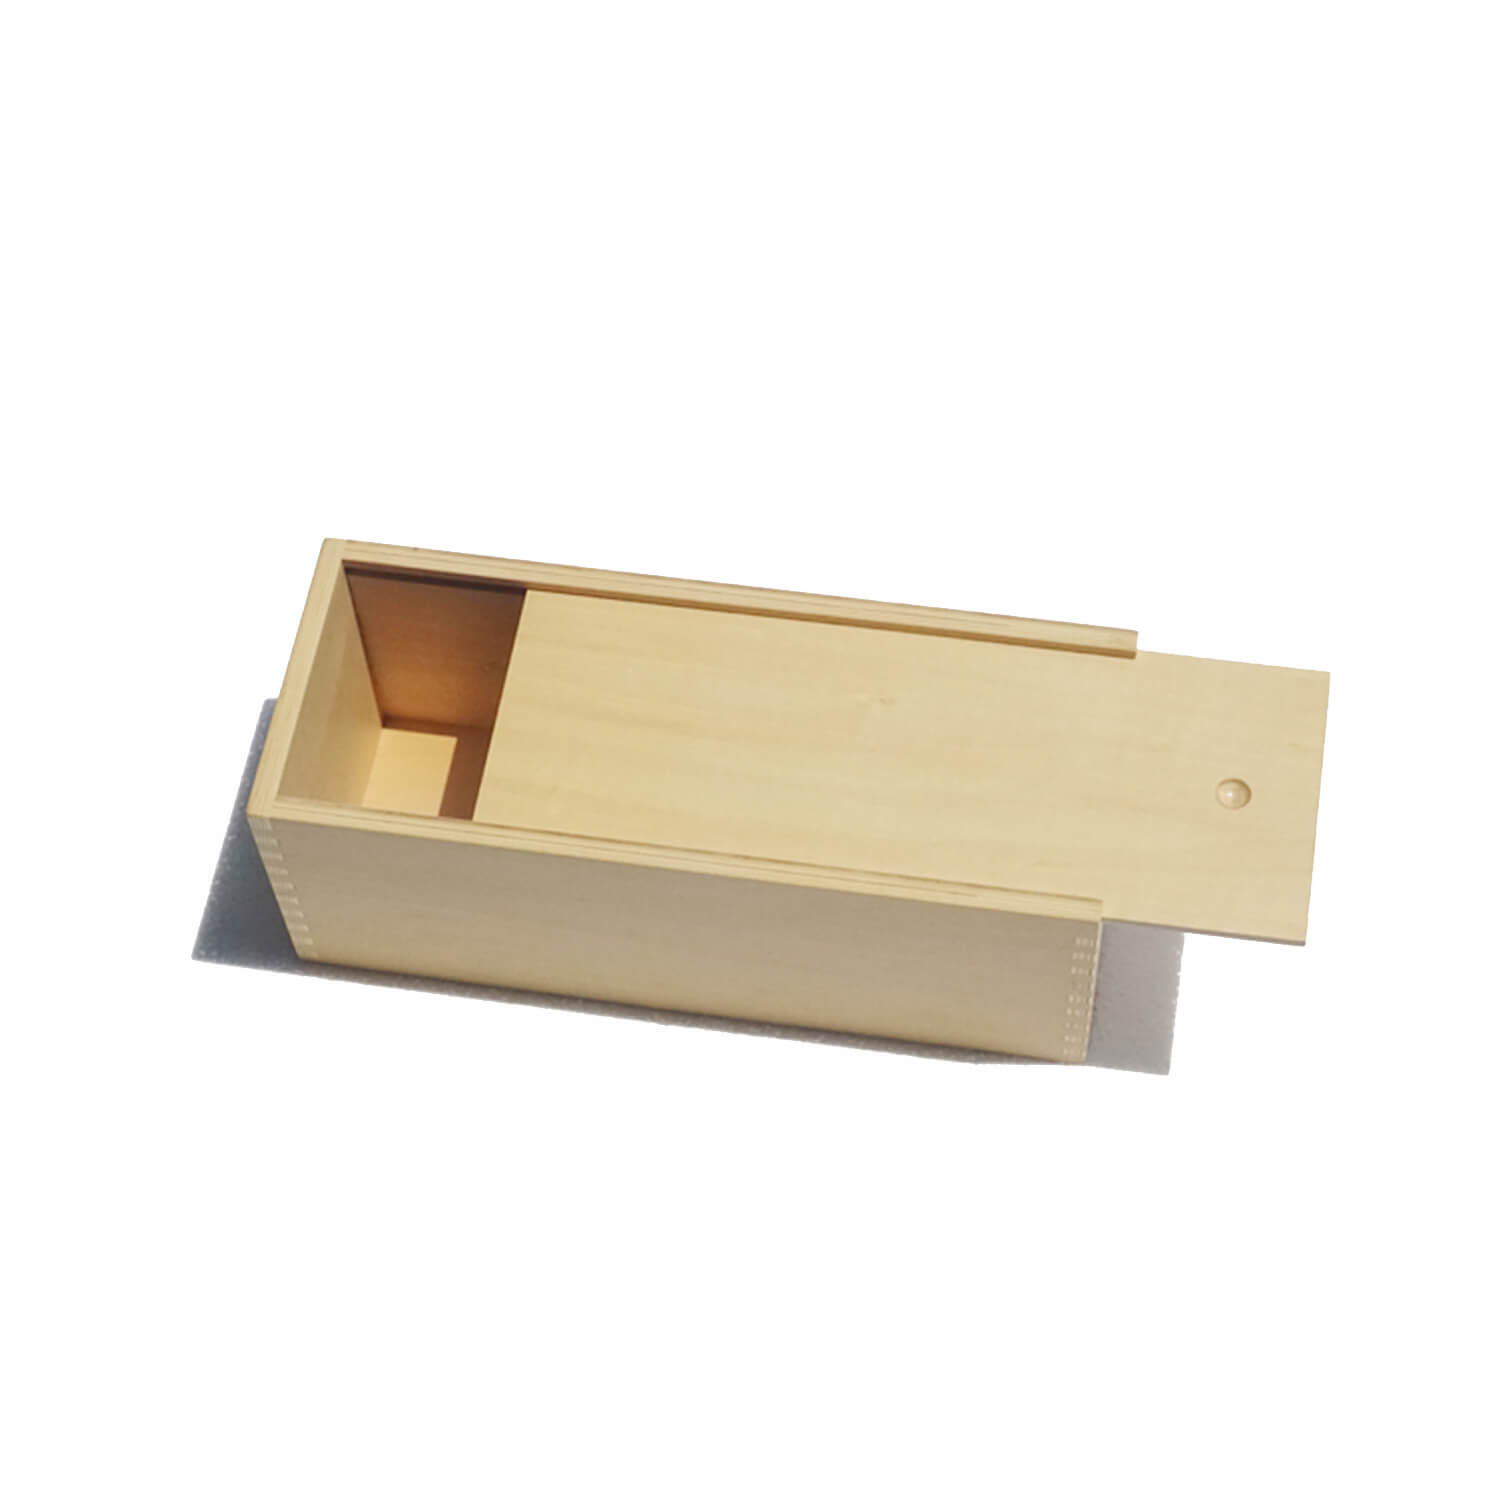 Box for Wooden Ten Base(32.7x13x12cm)